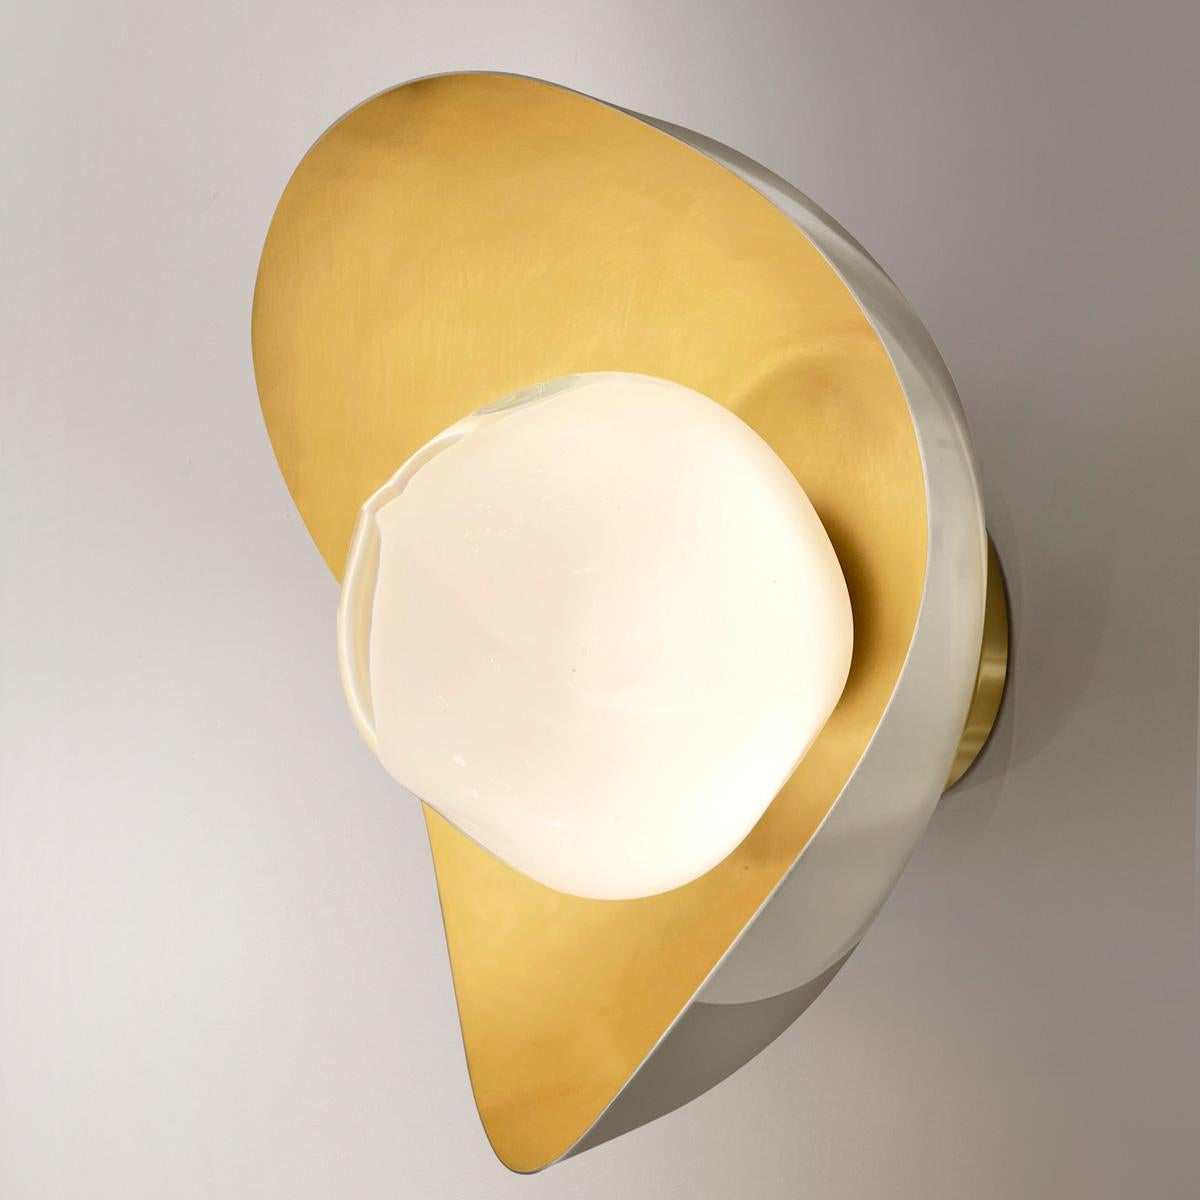 Perla Wall Light by Gaspare Asaro-Satin Brass/Acqua Finish For Sale 1